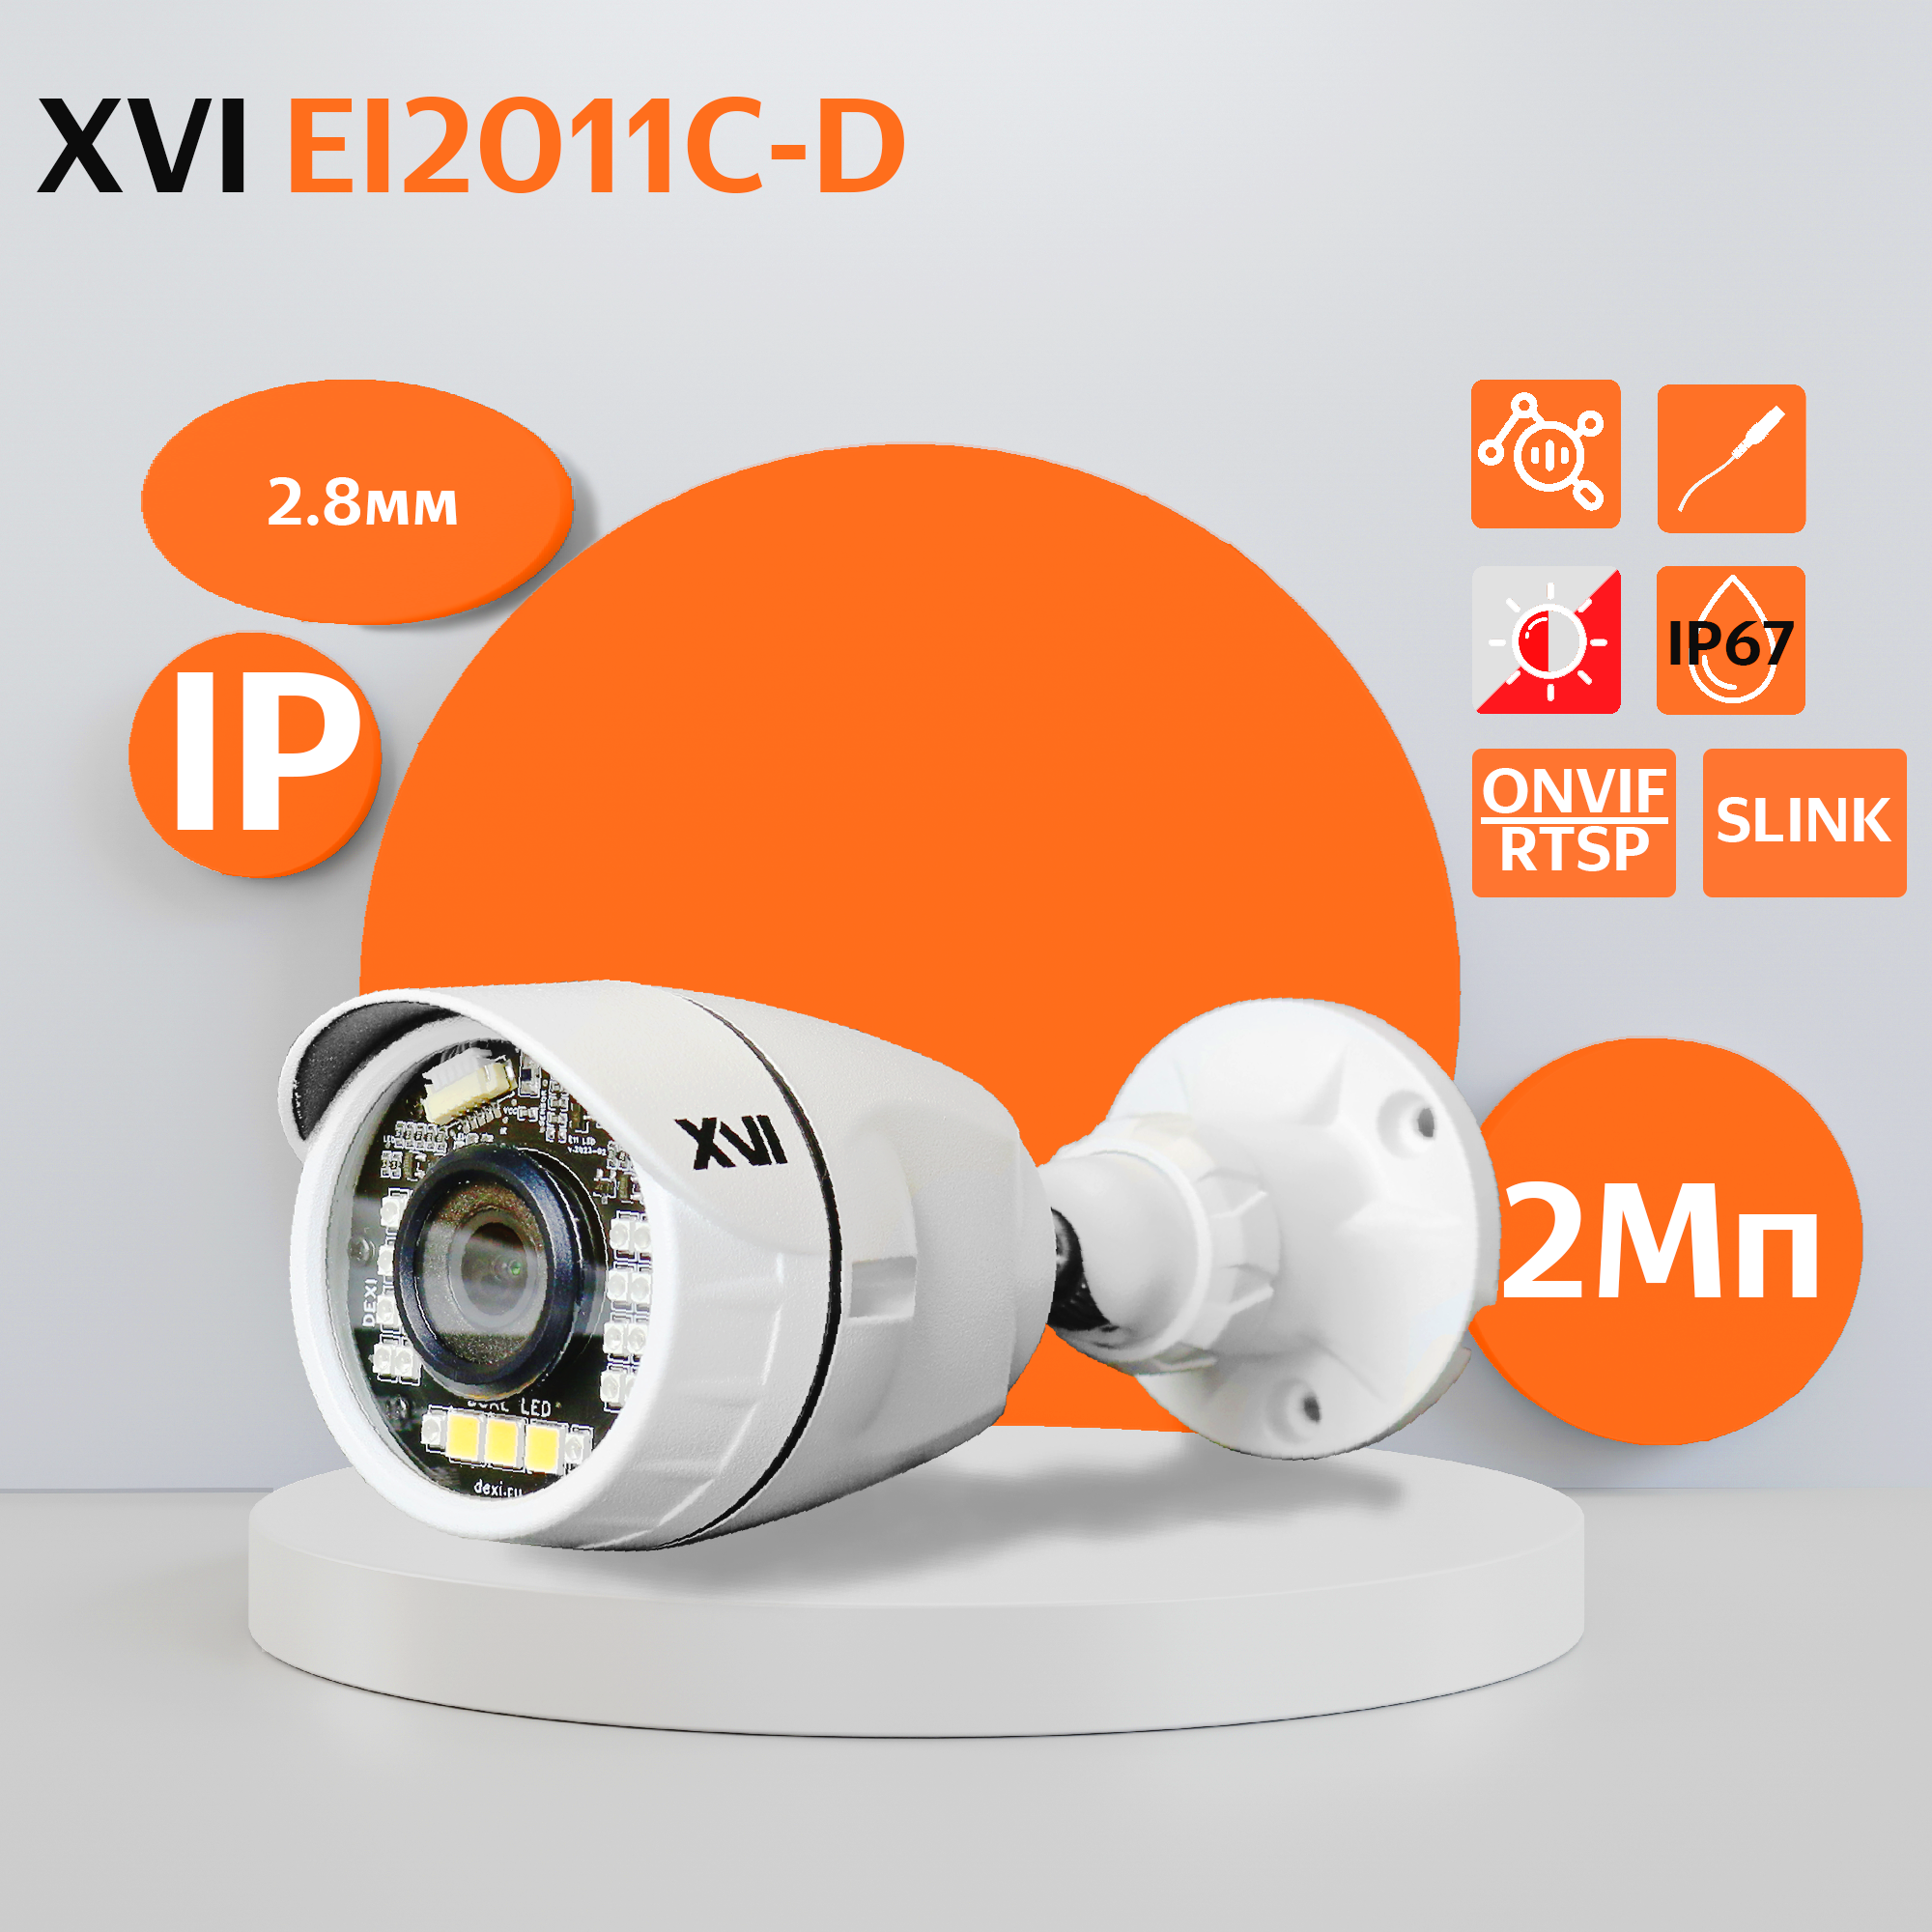 Уличная IP камера XVI EI2011C-D2.8, 2Мп, фикс.объектив, Dual Led f= 2.8мм (H94,V52) уличная ip камера xvi ei2011c d2 8 2мп фикс объектив dual led f 2 8мм h94 v52